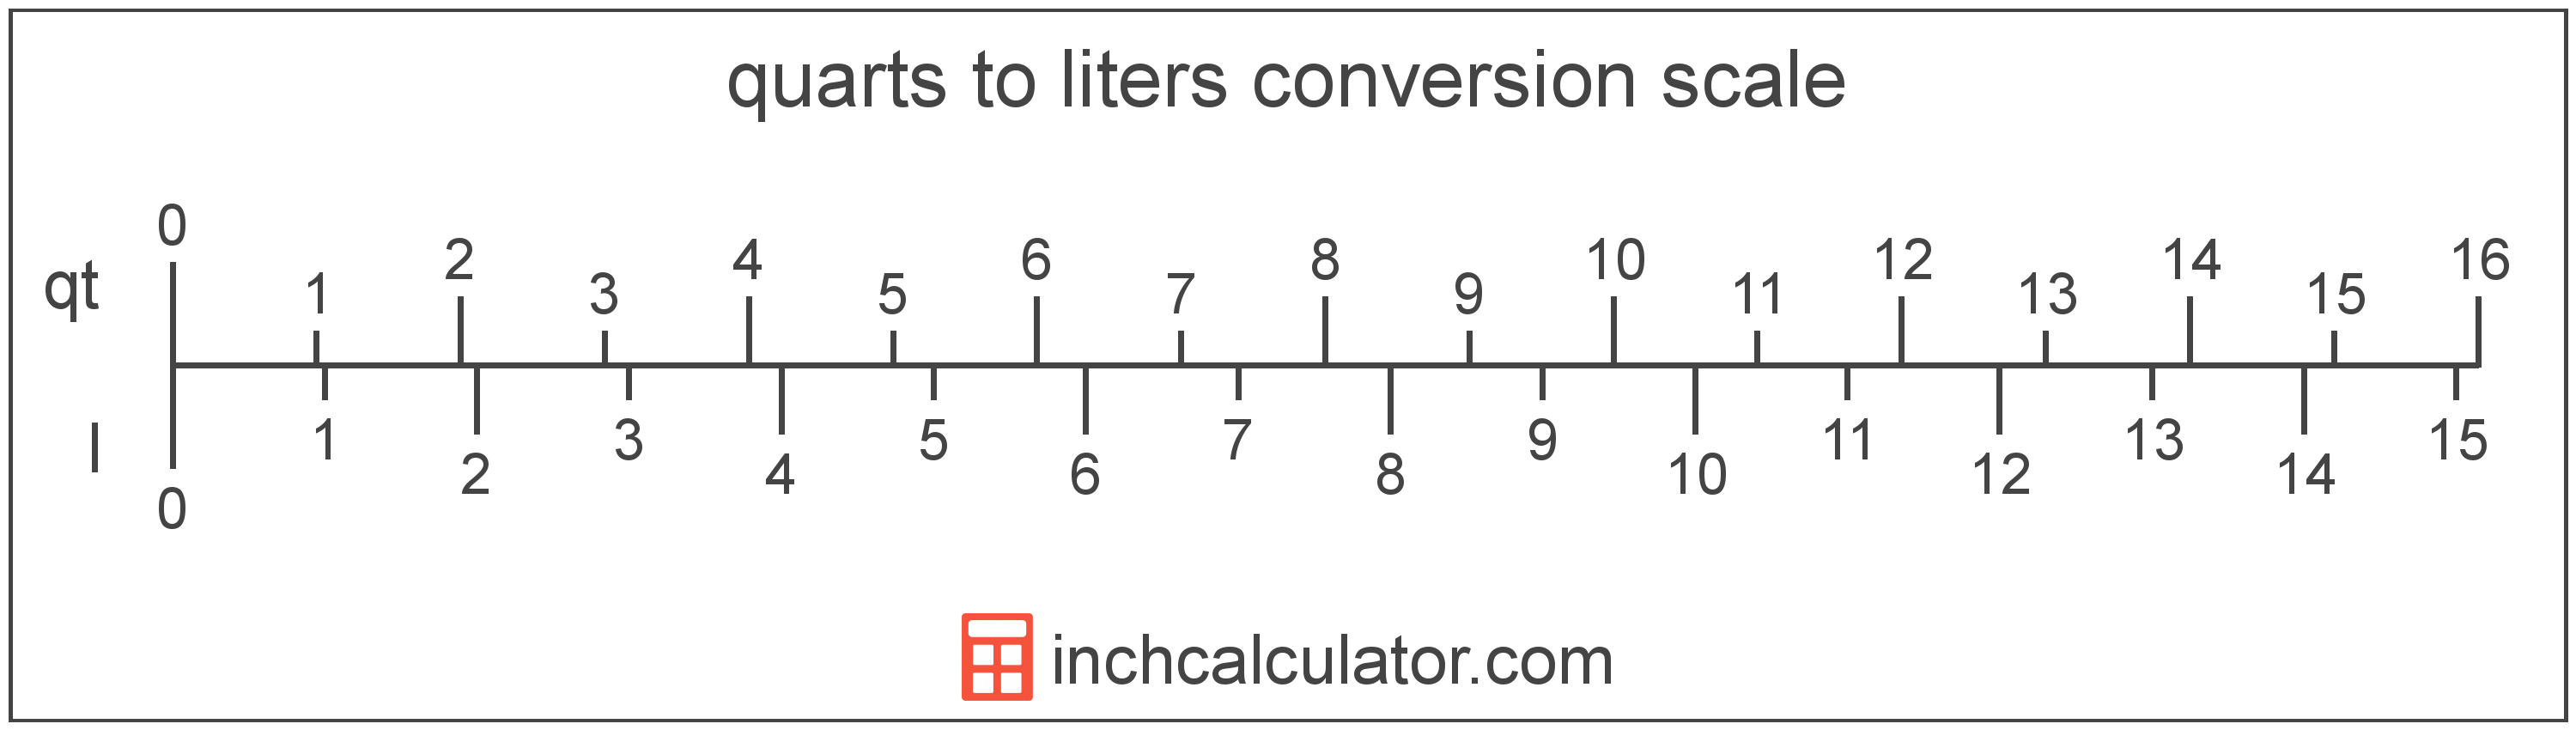 1.3 Liters Equals How Many Quarts